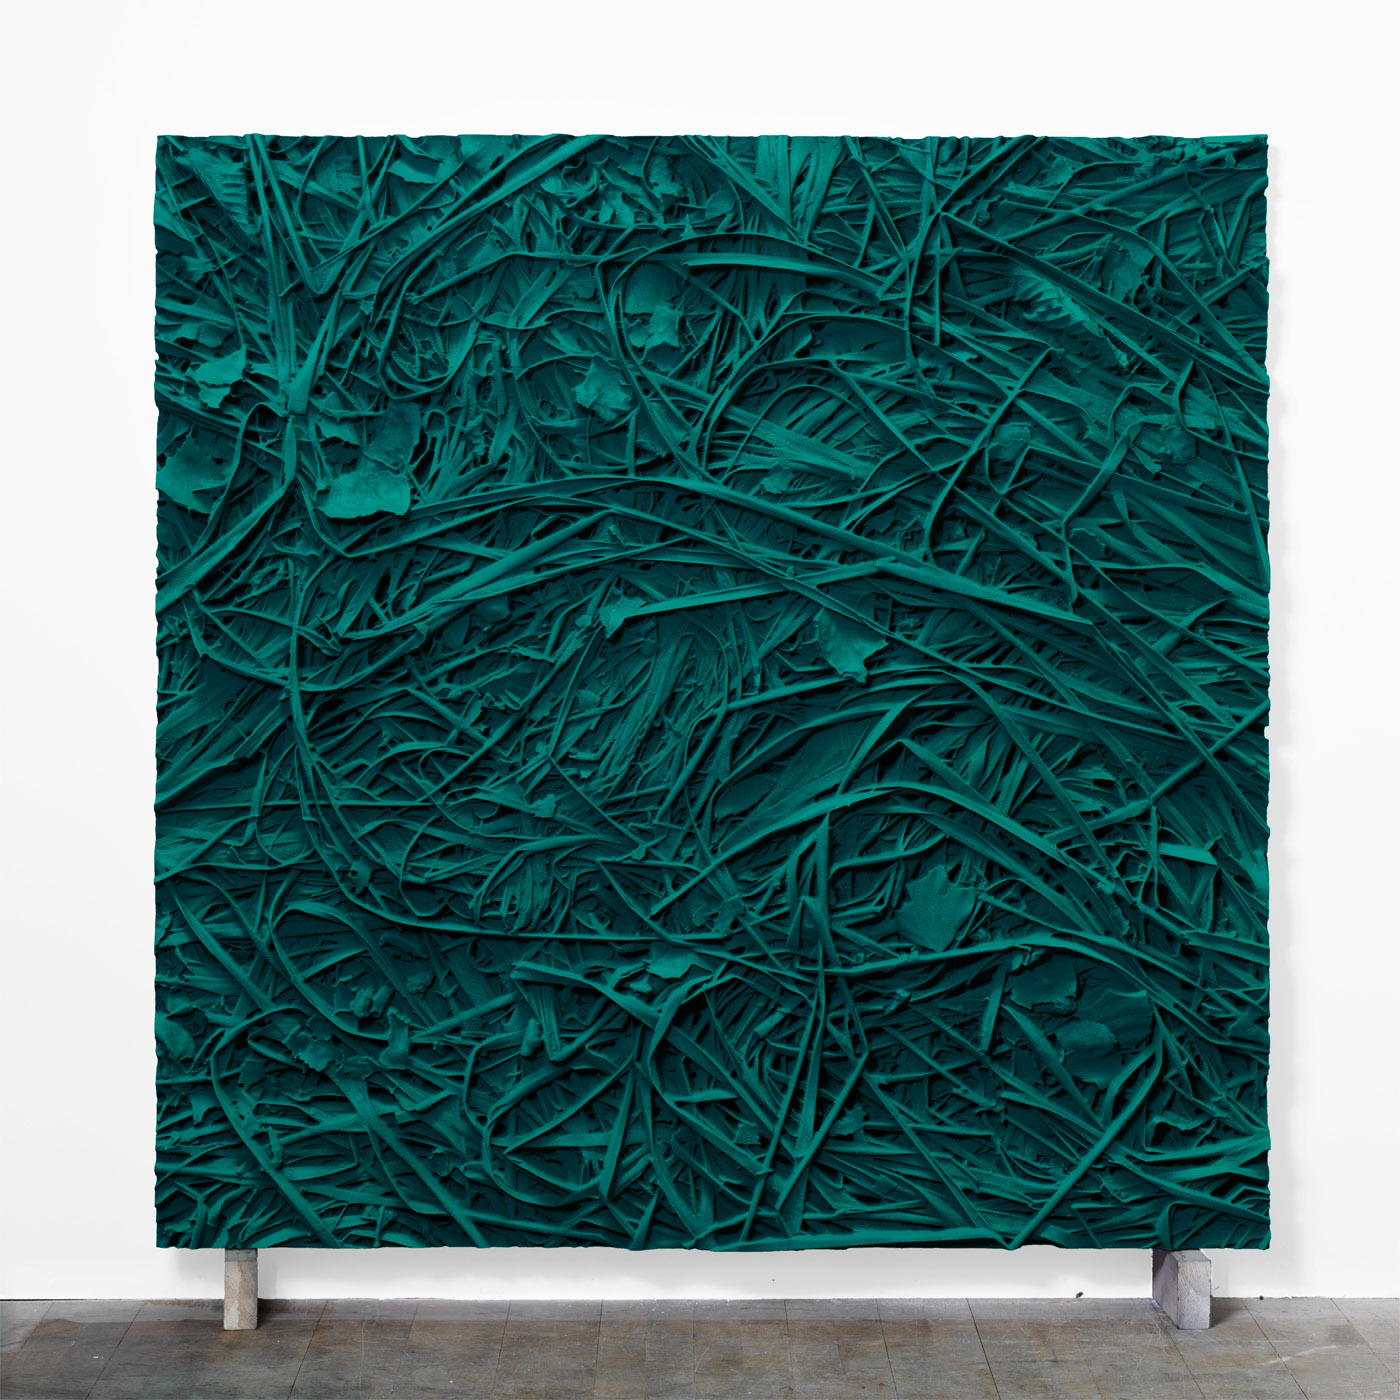 Juri Markkula, PG7 / 18 Grass, 2015, Pigmented polyvinyl on polyuretan relief, 150 x 150 x 11 cm